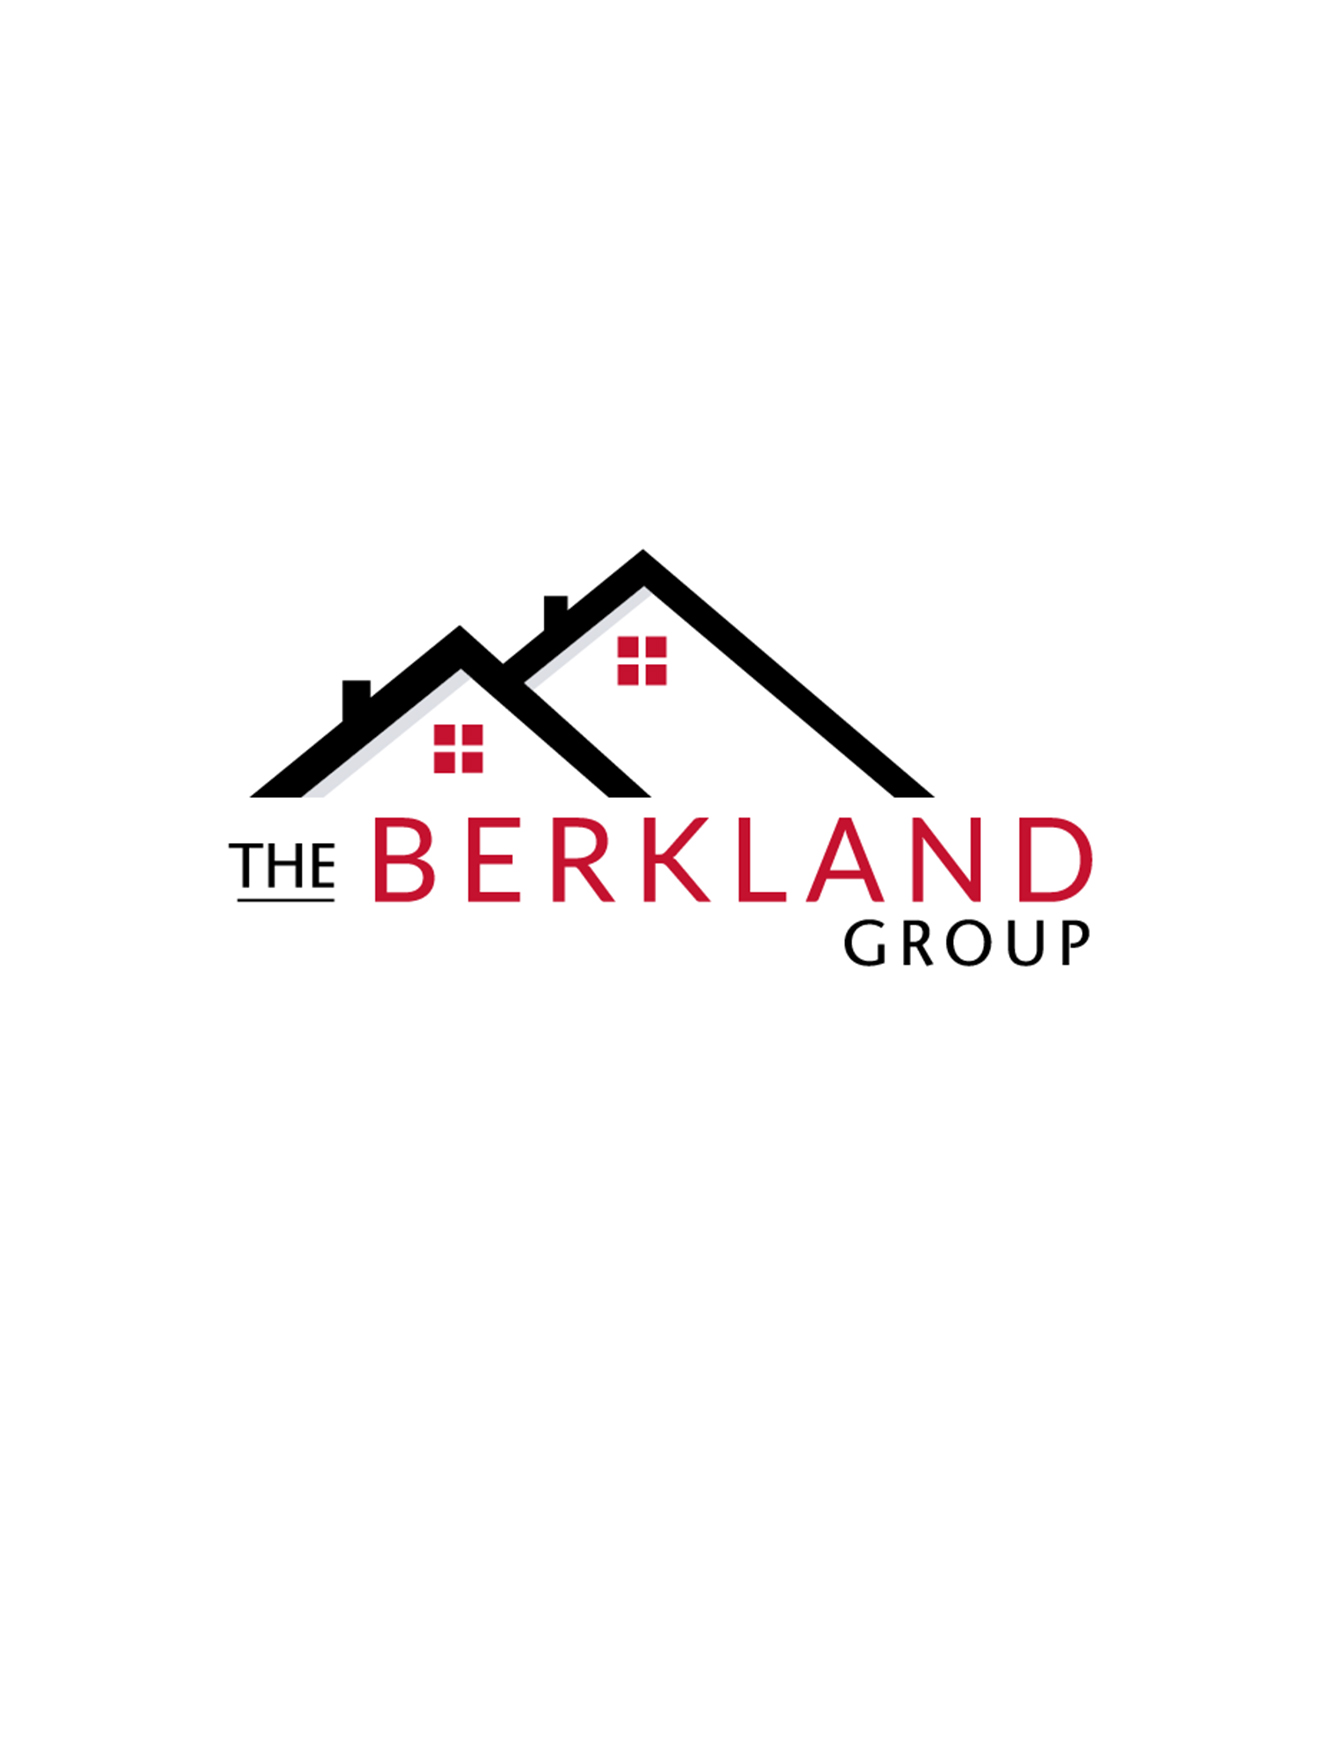 The Berkland Group